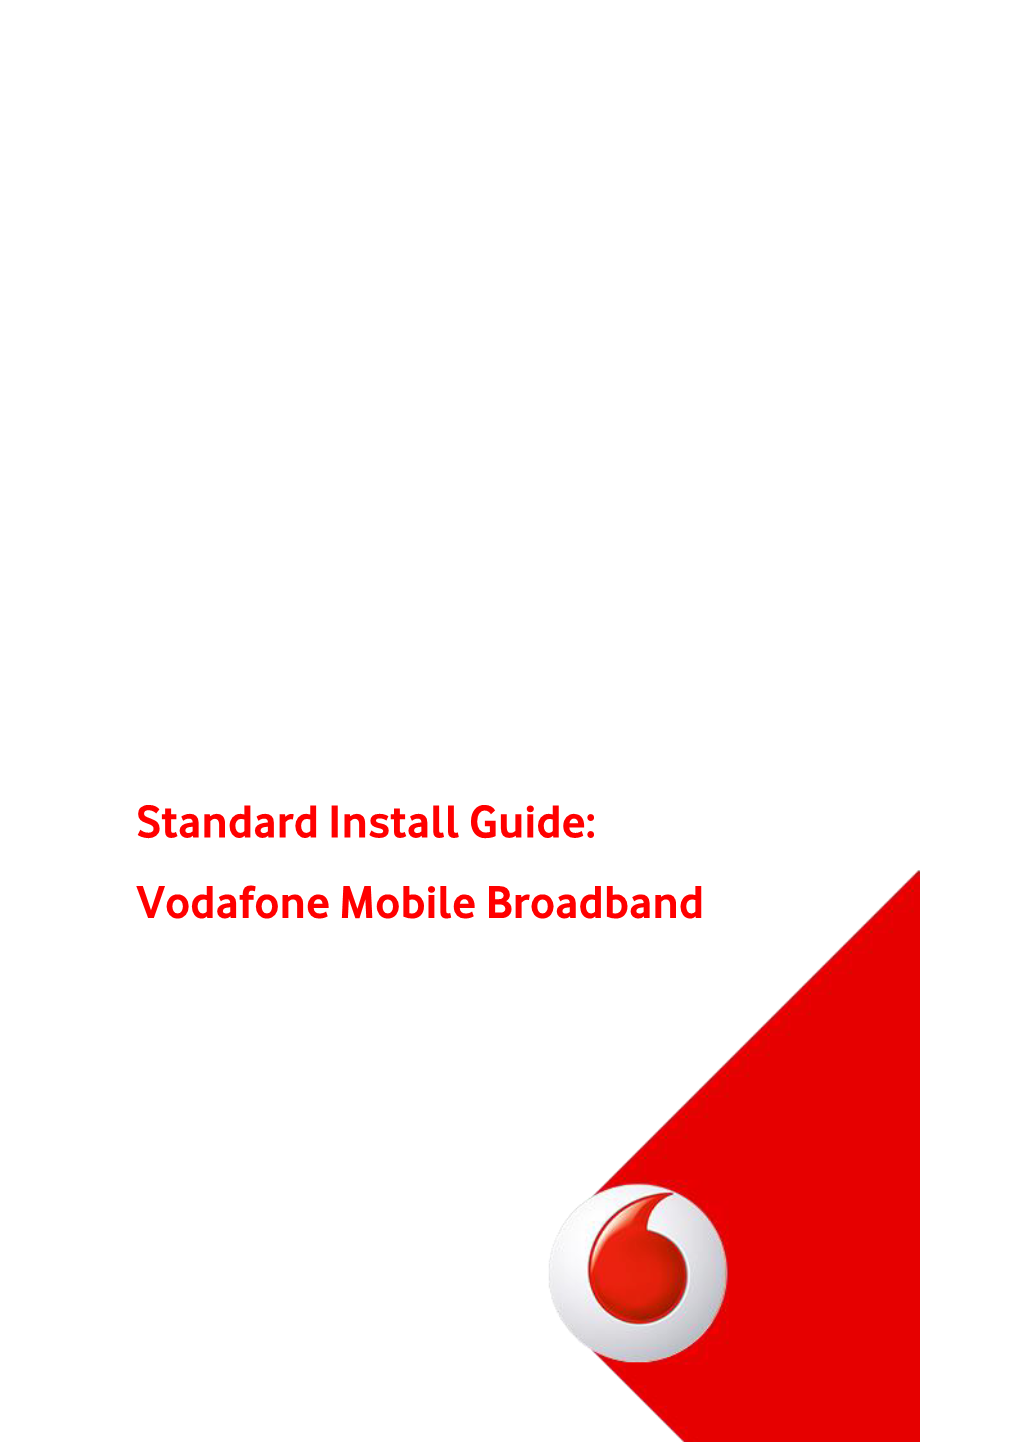 VMB 10.2 Standard Install Guide